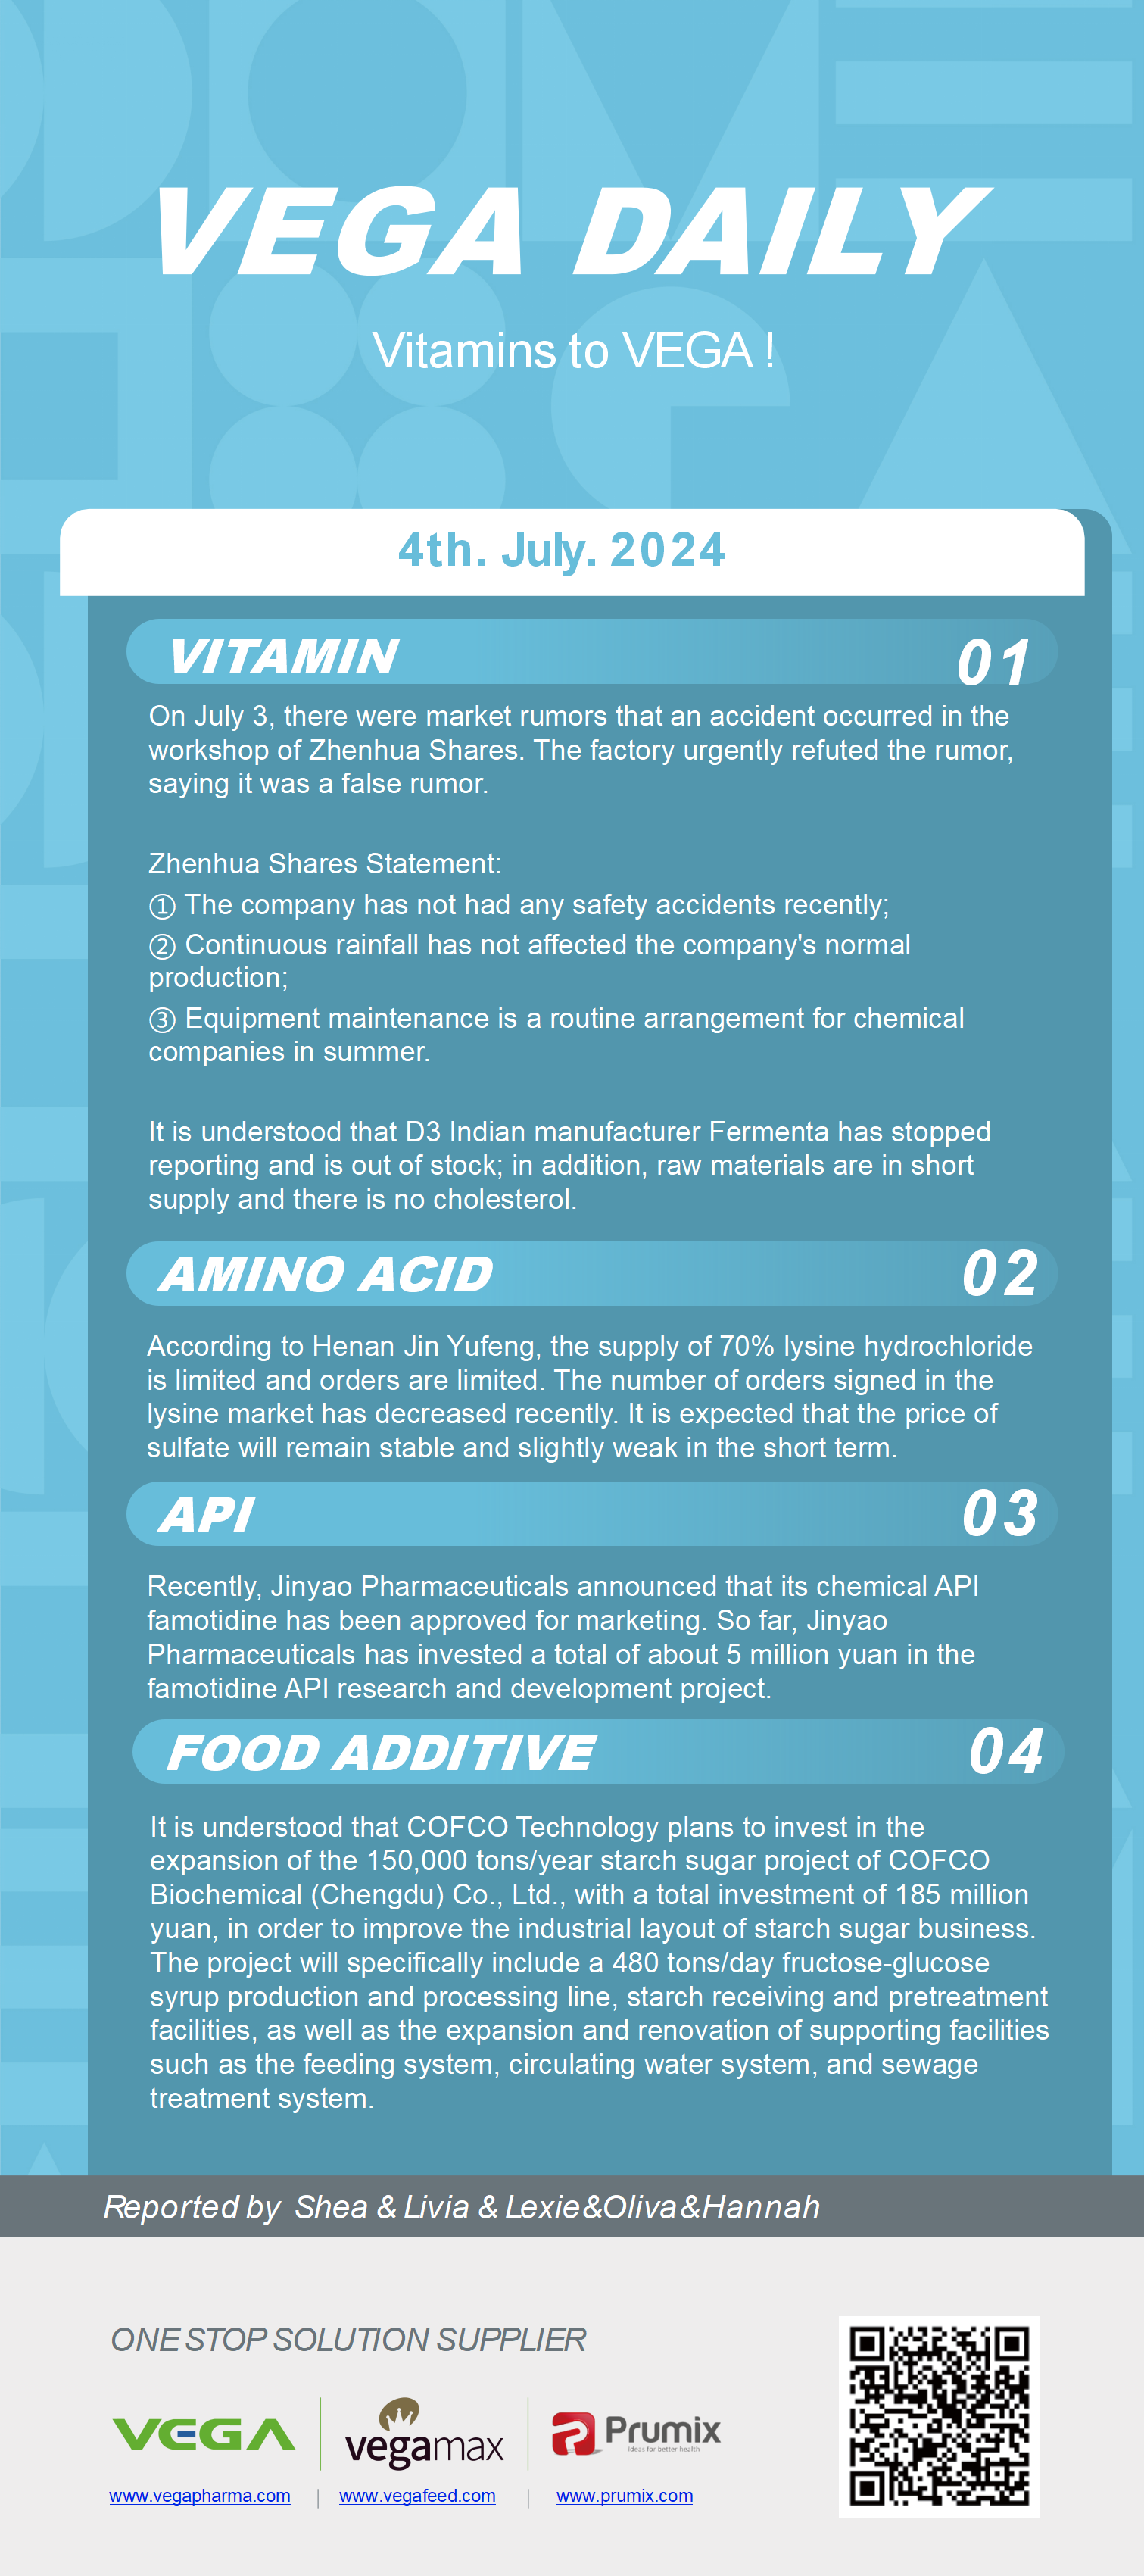 Vega Daily Dated on Jul 4th 2024 Vitamin Amino Acid APl Food Additives.png